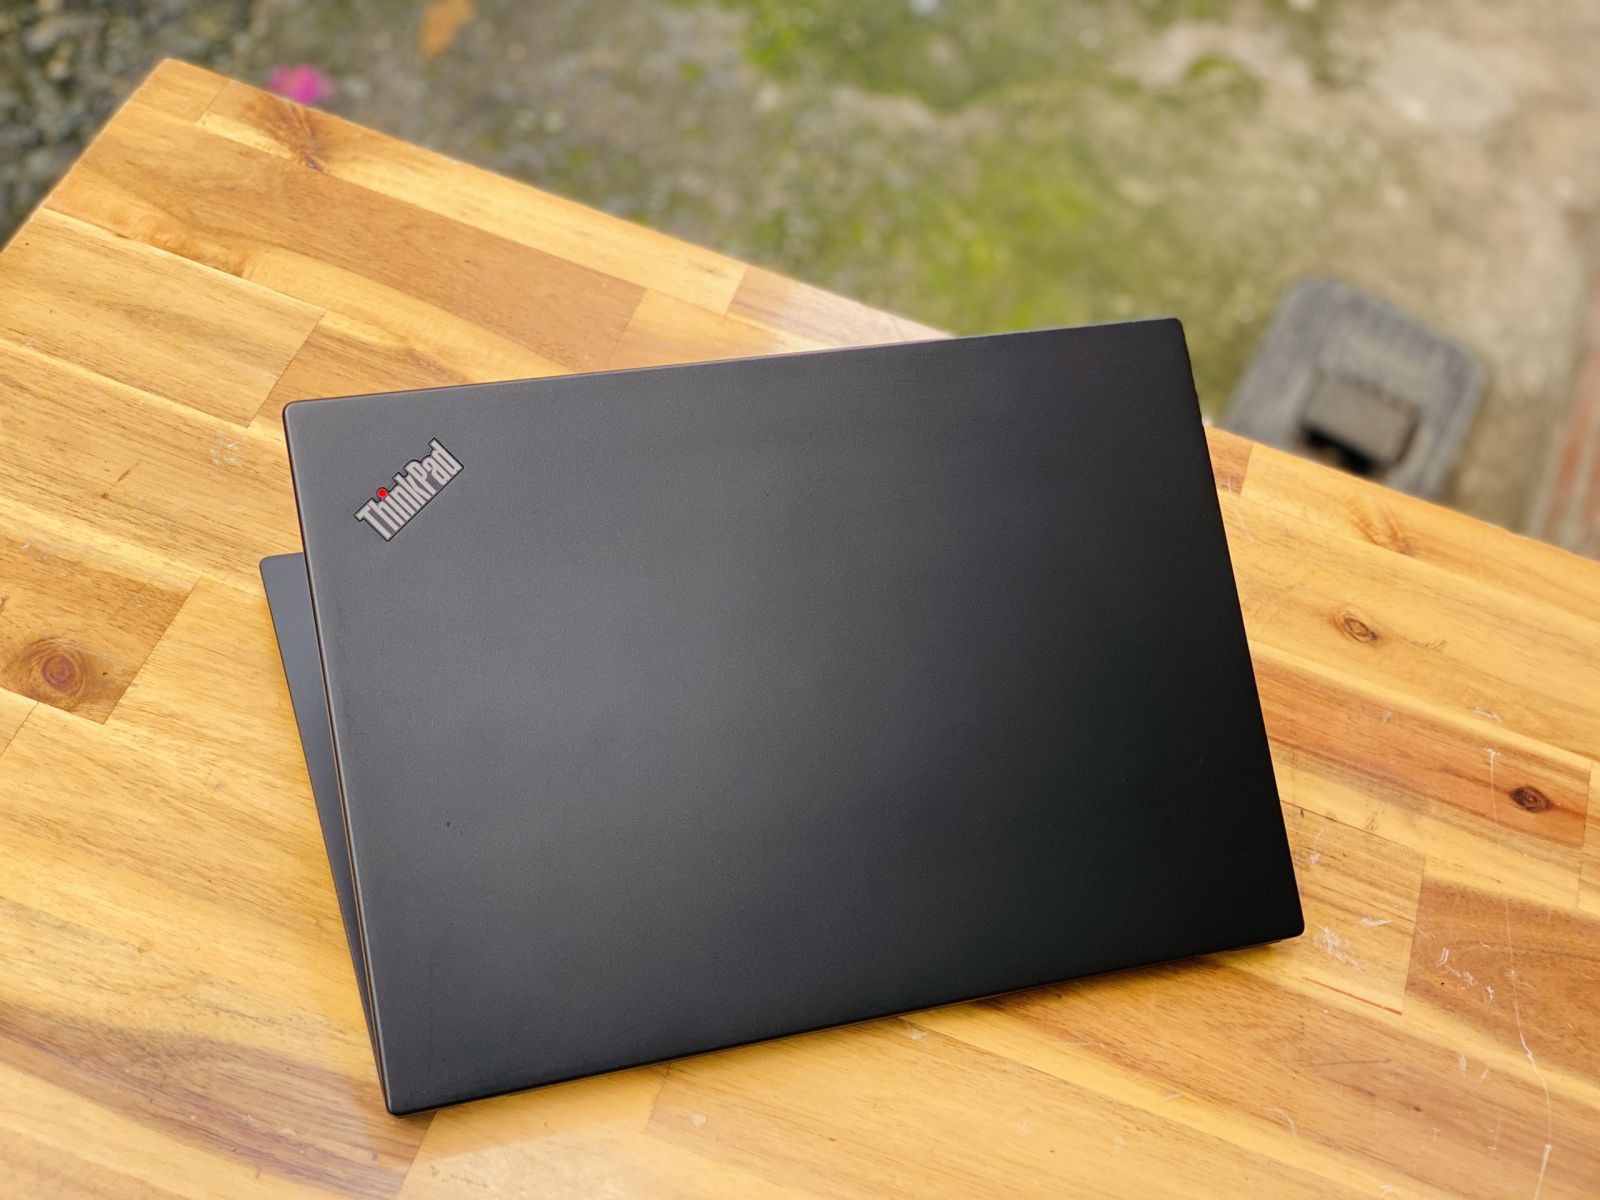 Lenovo Thinkpad X13 20T3 cũ